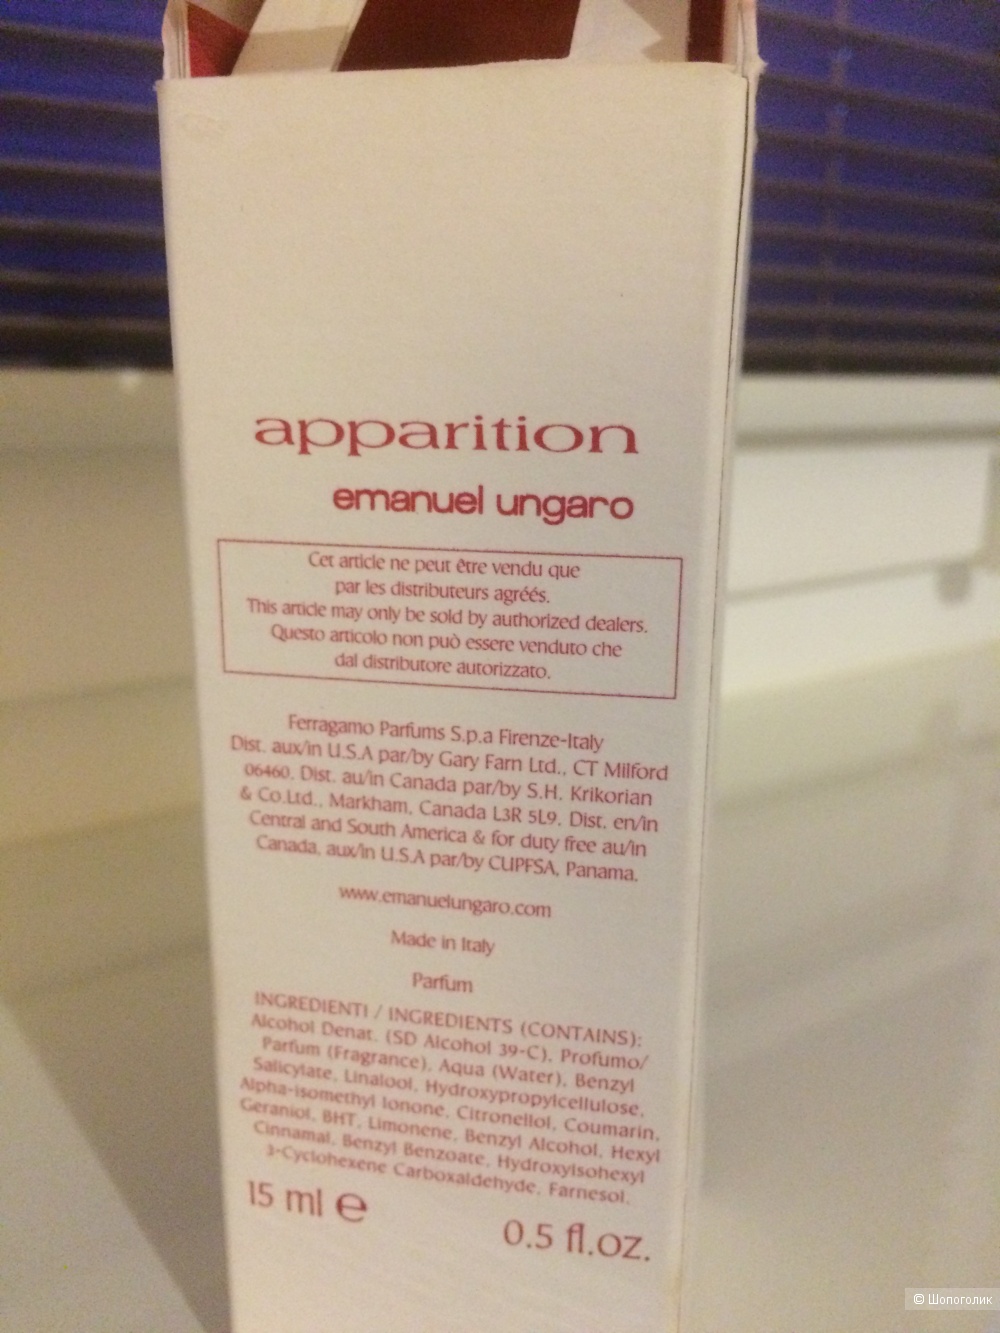 Apparition Parfum Revelation Emanuel Ungaro 15 мл.Экстракт.